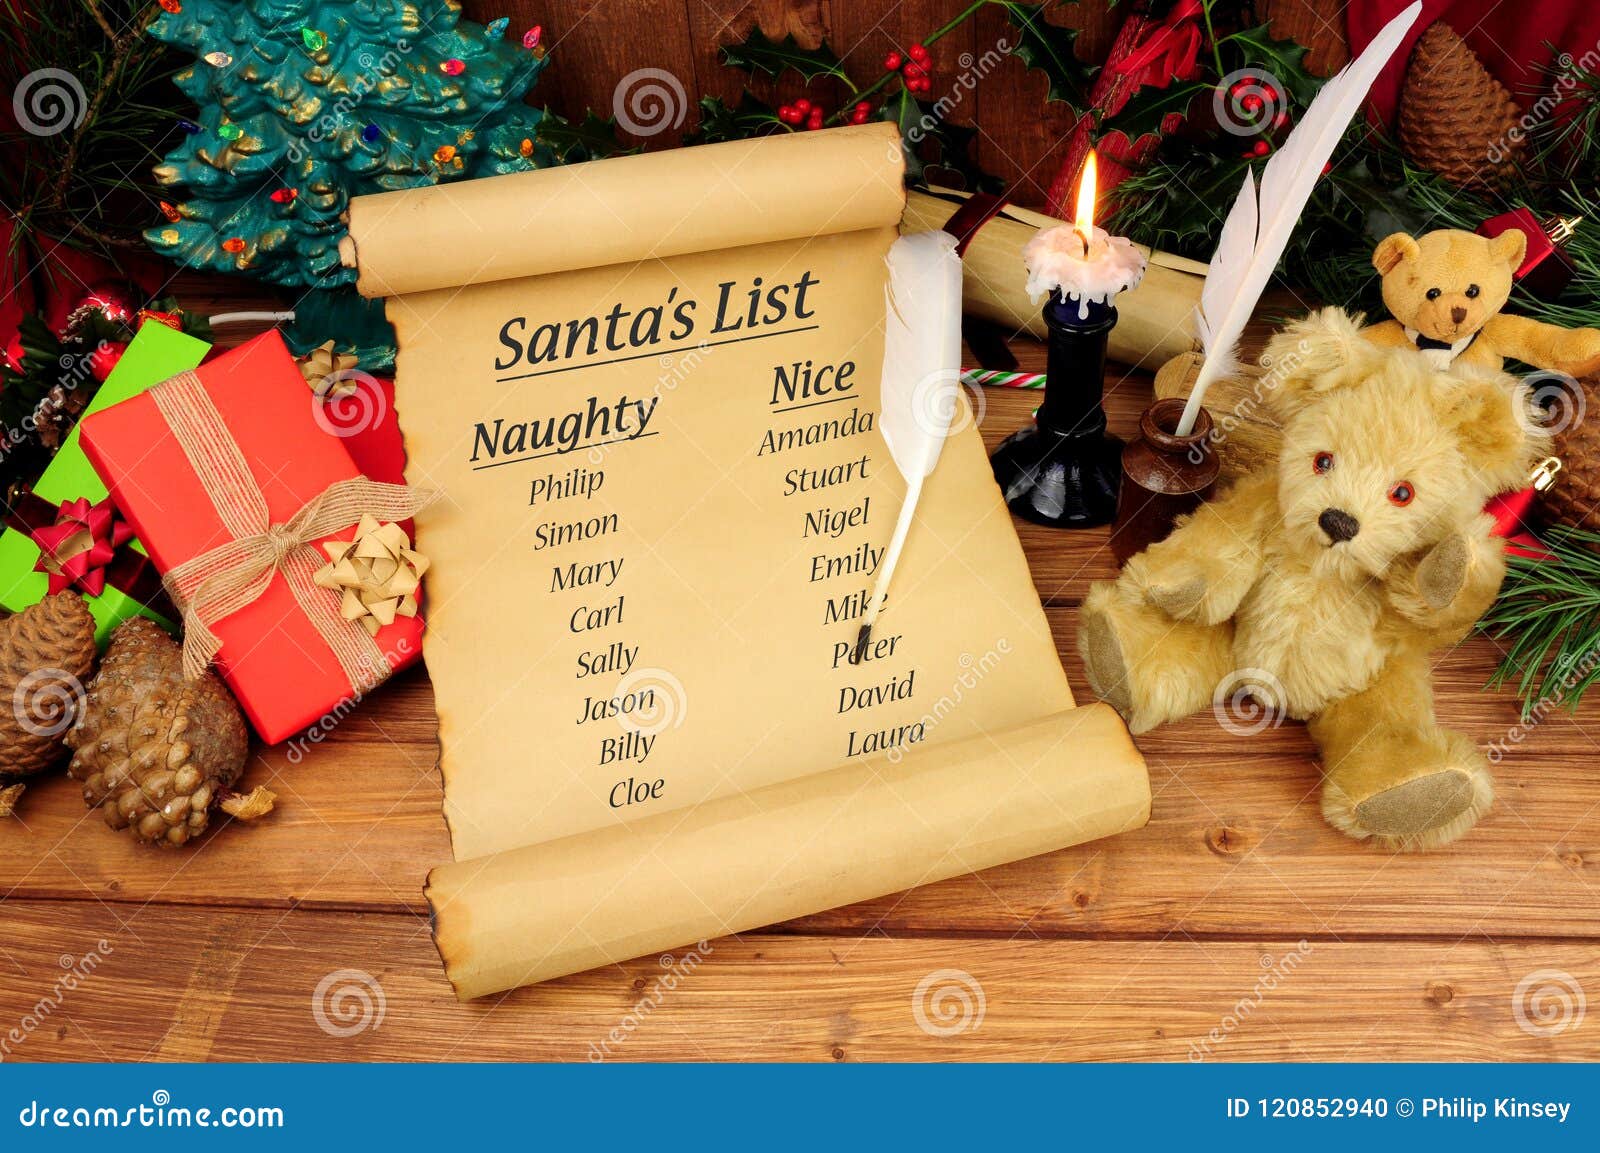 santa`s naughty and nice list